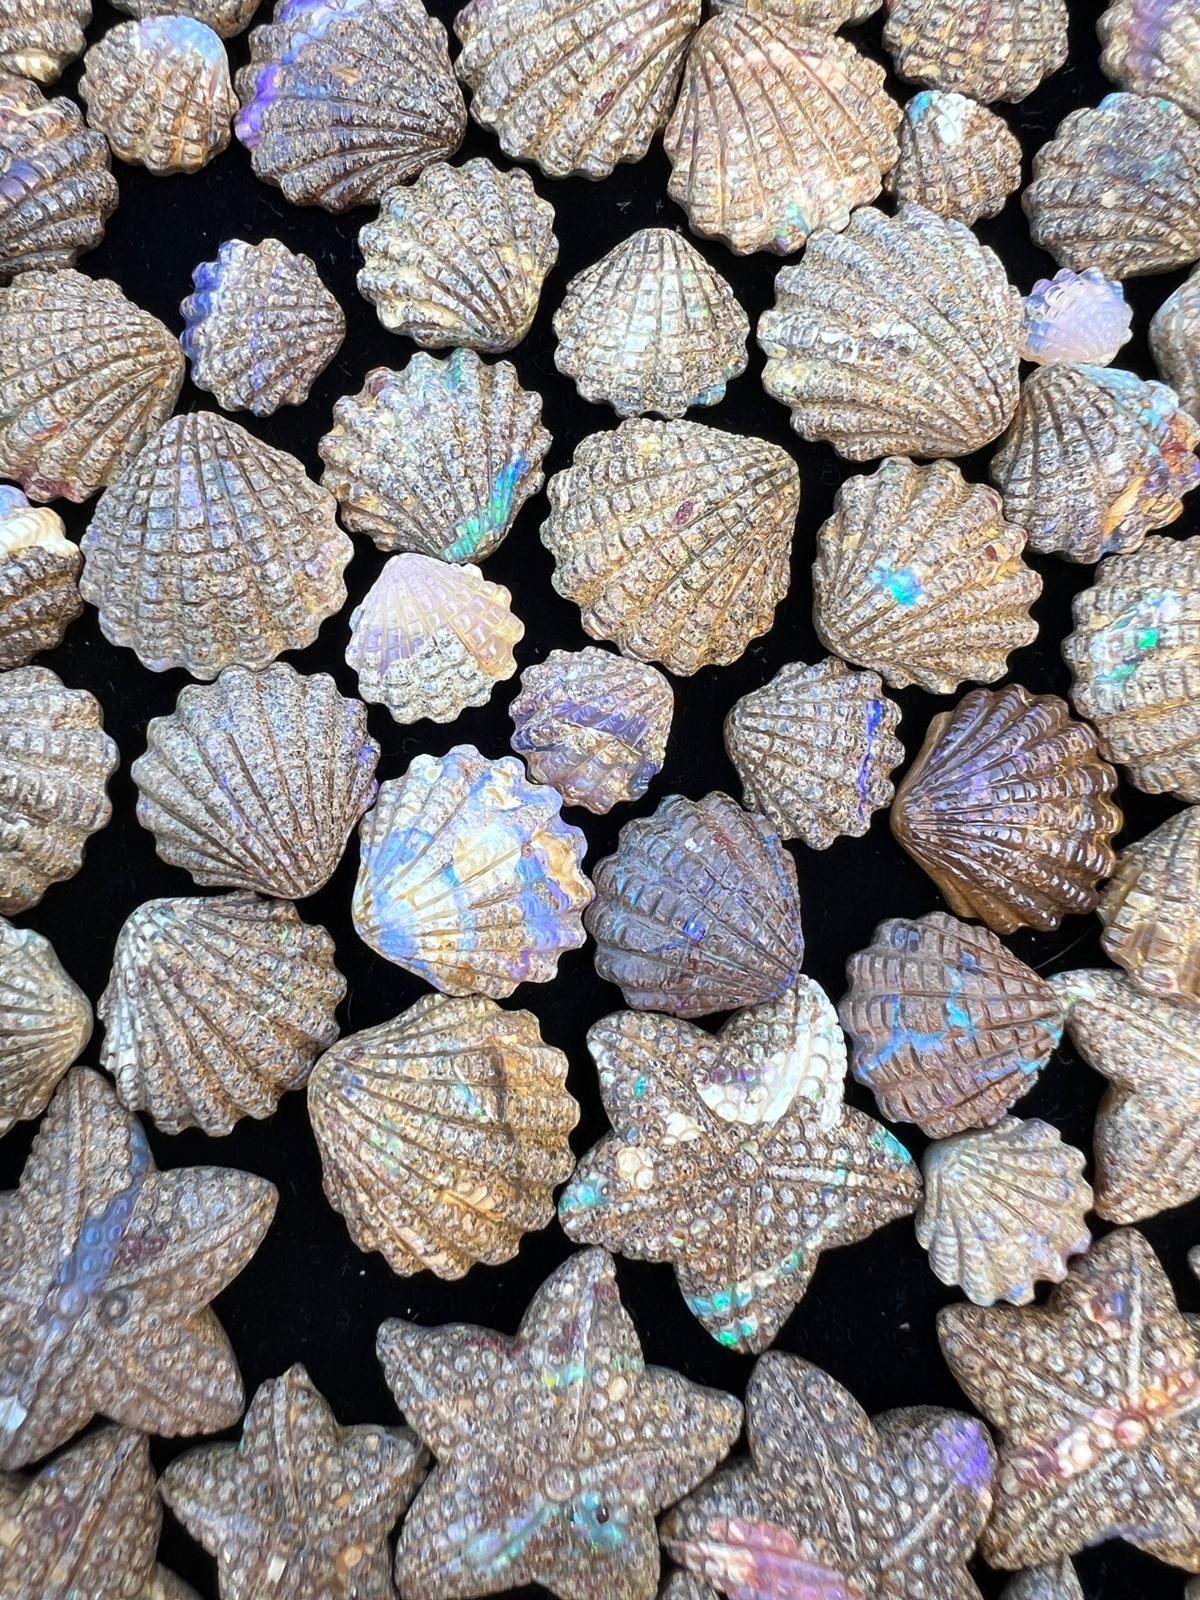 Exquisite 16.28 Ct Australian Boulder Opal Matrix Scallop Shell Carving